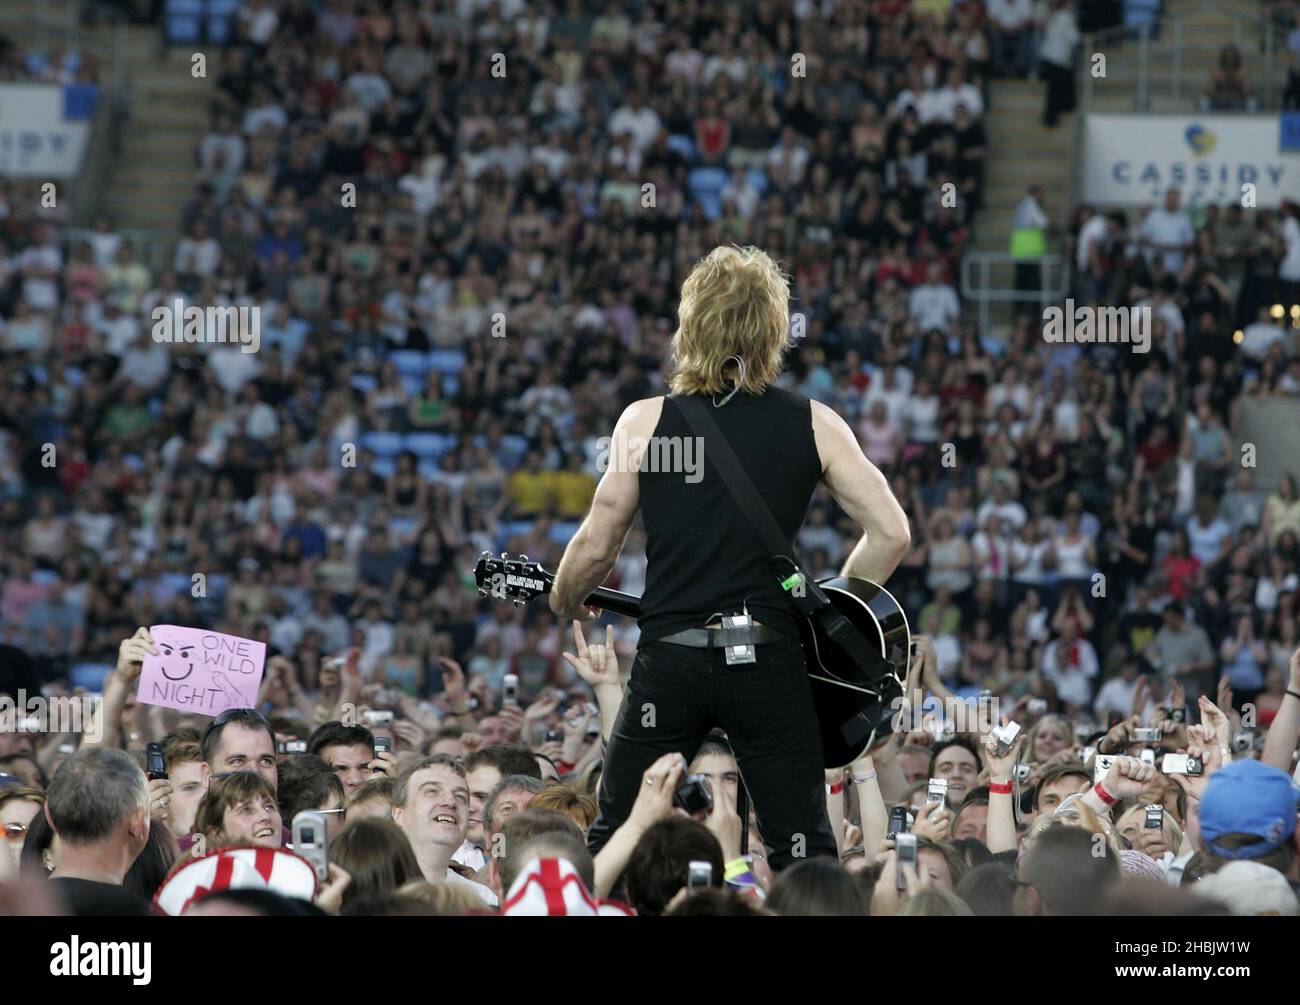 Jon Bon Jovi, Richie Sambora, Dave Ryan, Tico Torres of rock group Bon Jovi live on stage. Stock Photo